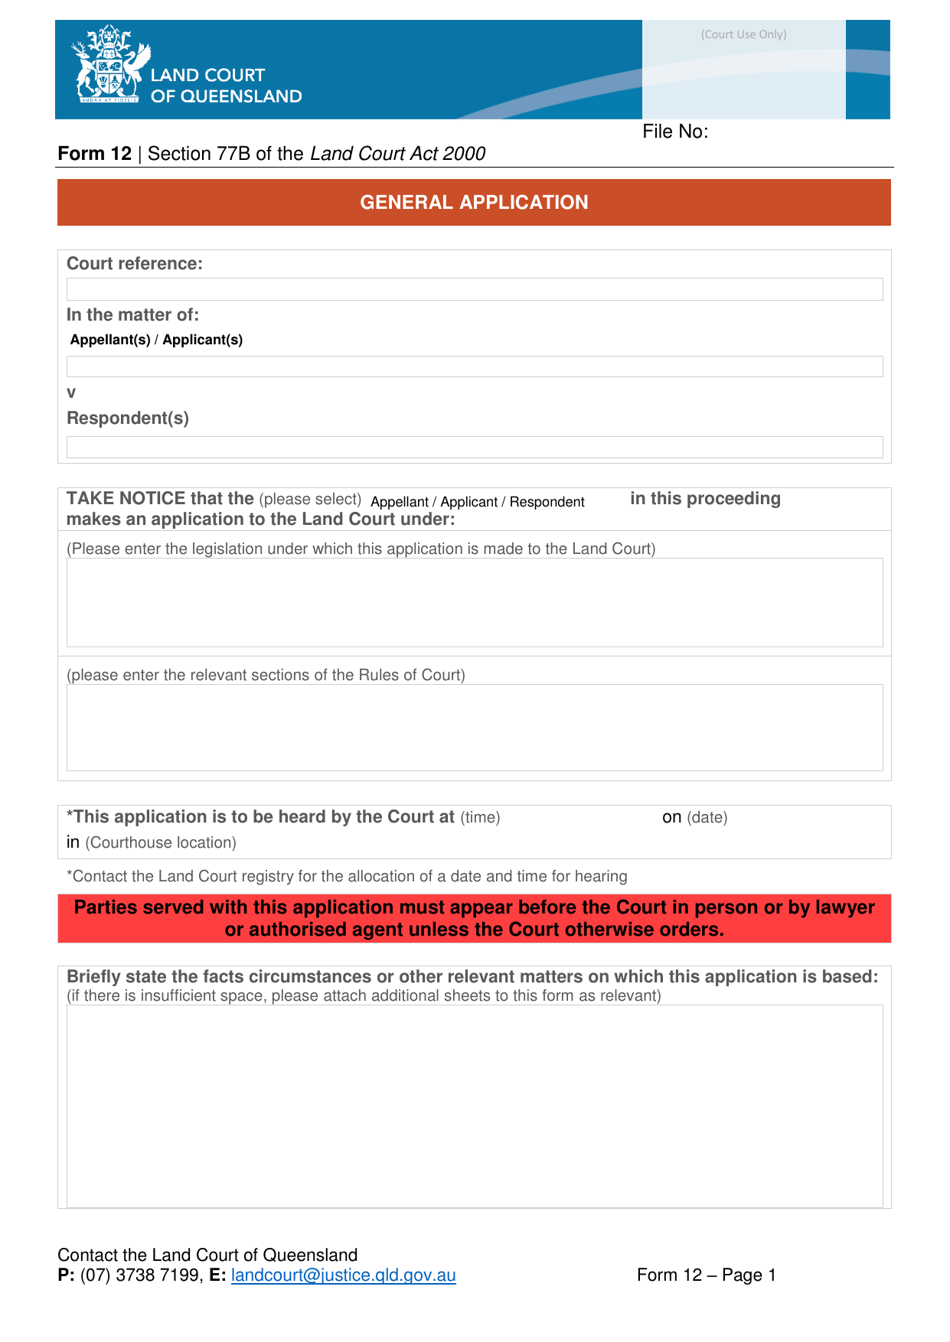 Form 12 General Application - Queensland, Australia, Page 1